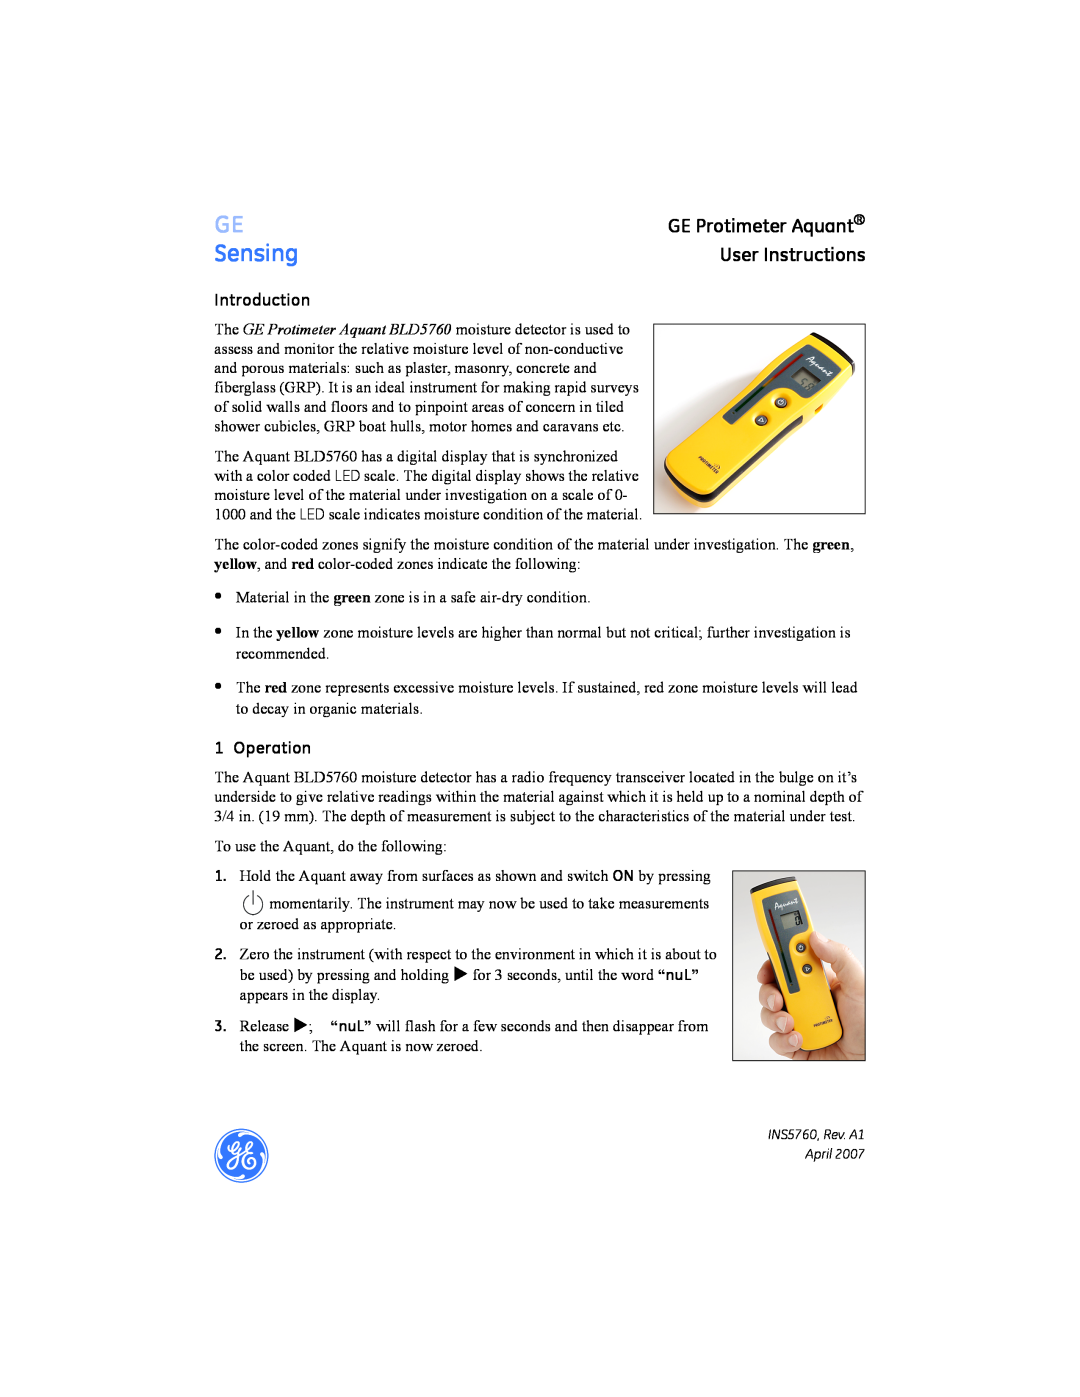 Shure BLD5760 manual GE Protimeter Aquant User Instructions, Introduction, Operation, Sensing 